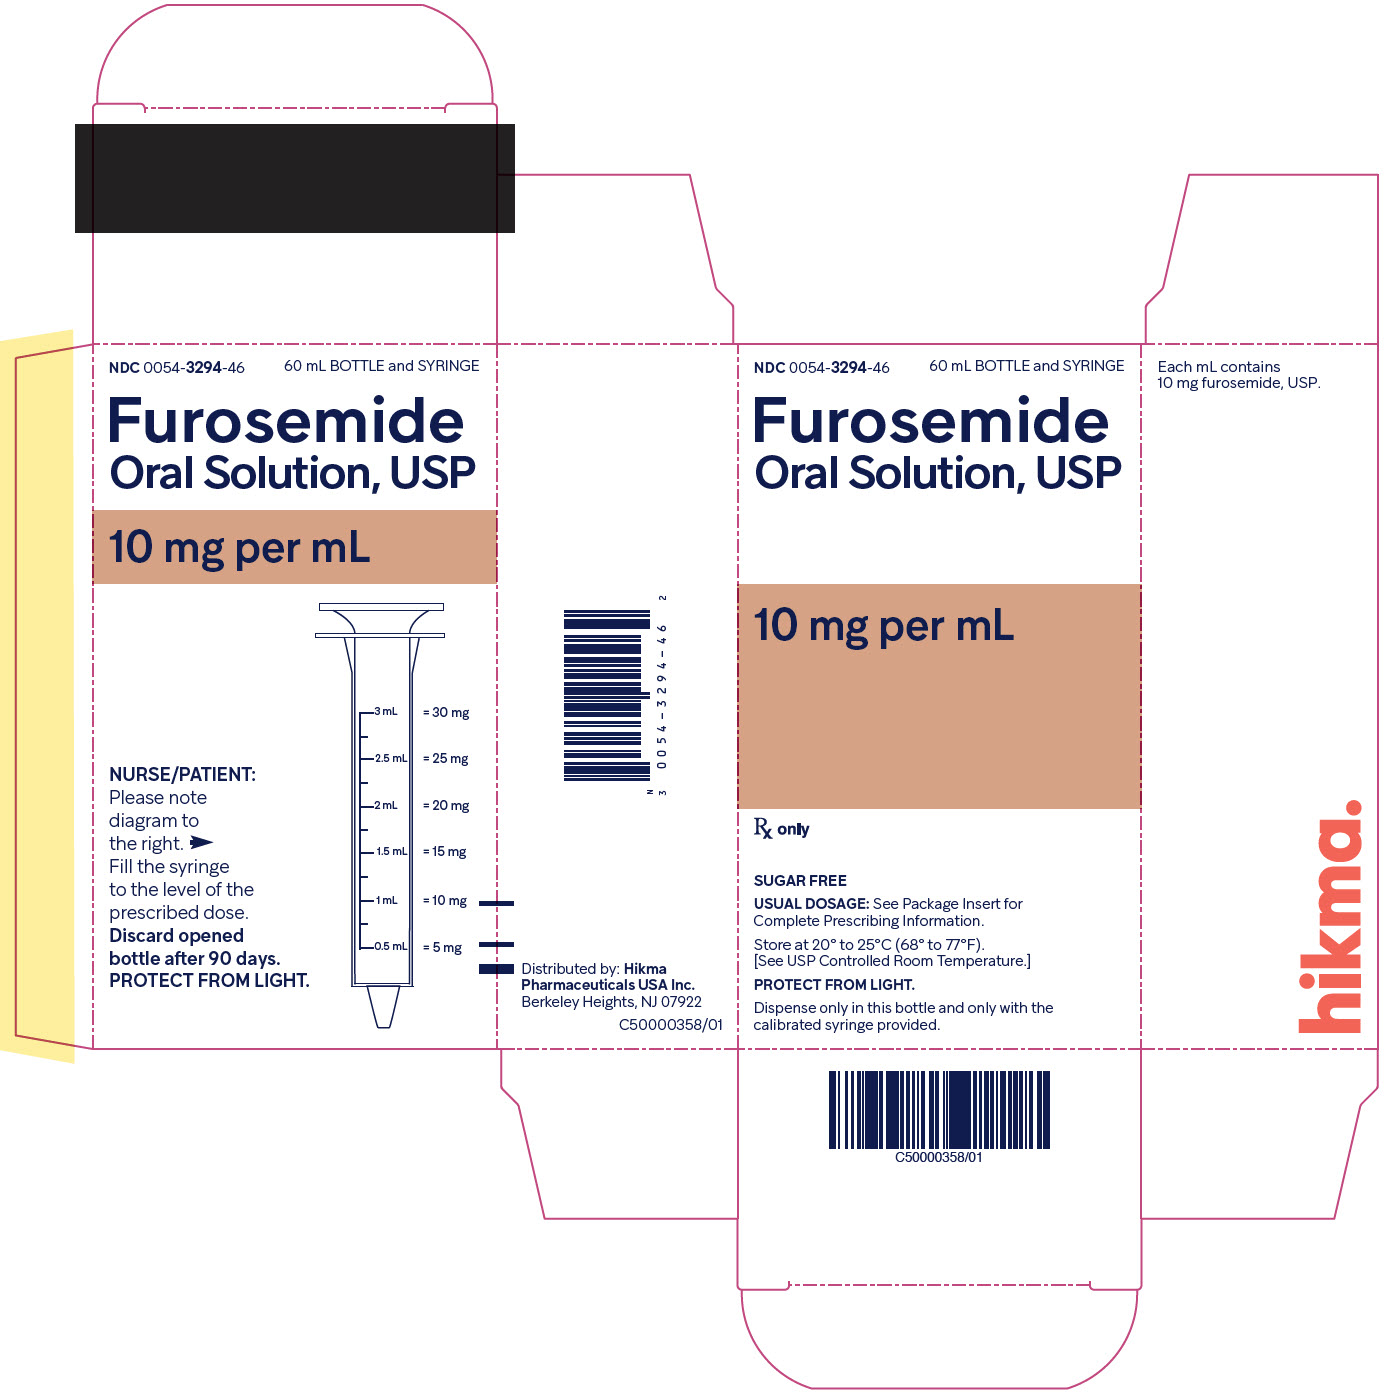 Furosemide Oral Solution USP, 10 mg per mL (60 mL Bottle and Syringe) folding carton image